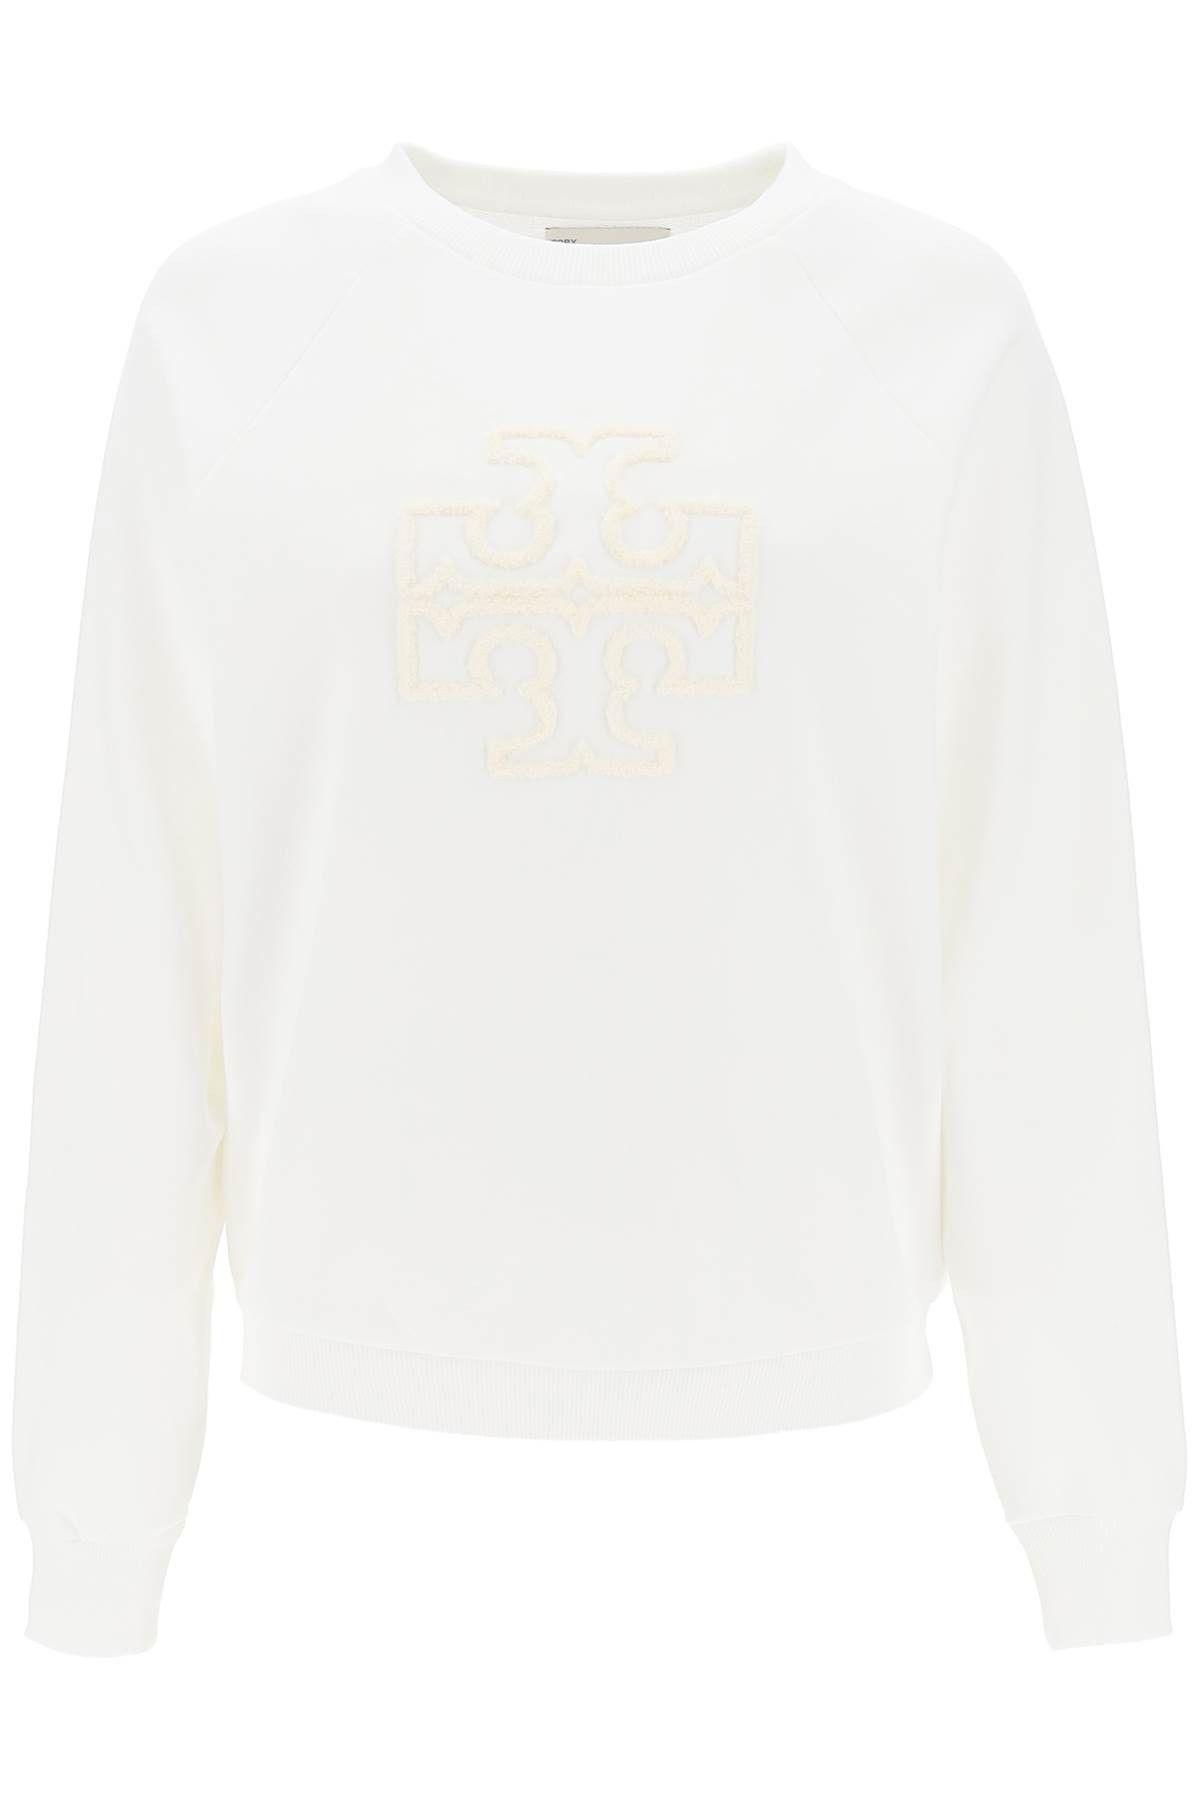 Tory Burch Tory burch crew-neck sweatshirt with t logo | Grailed